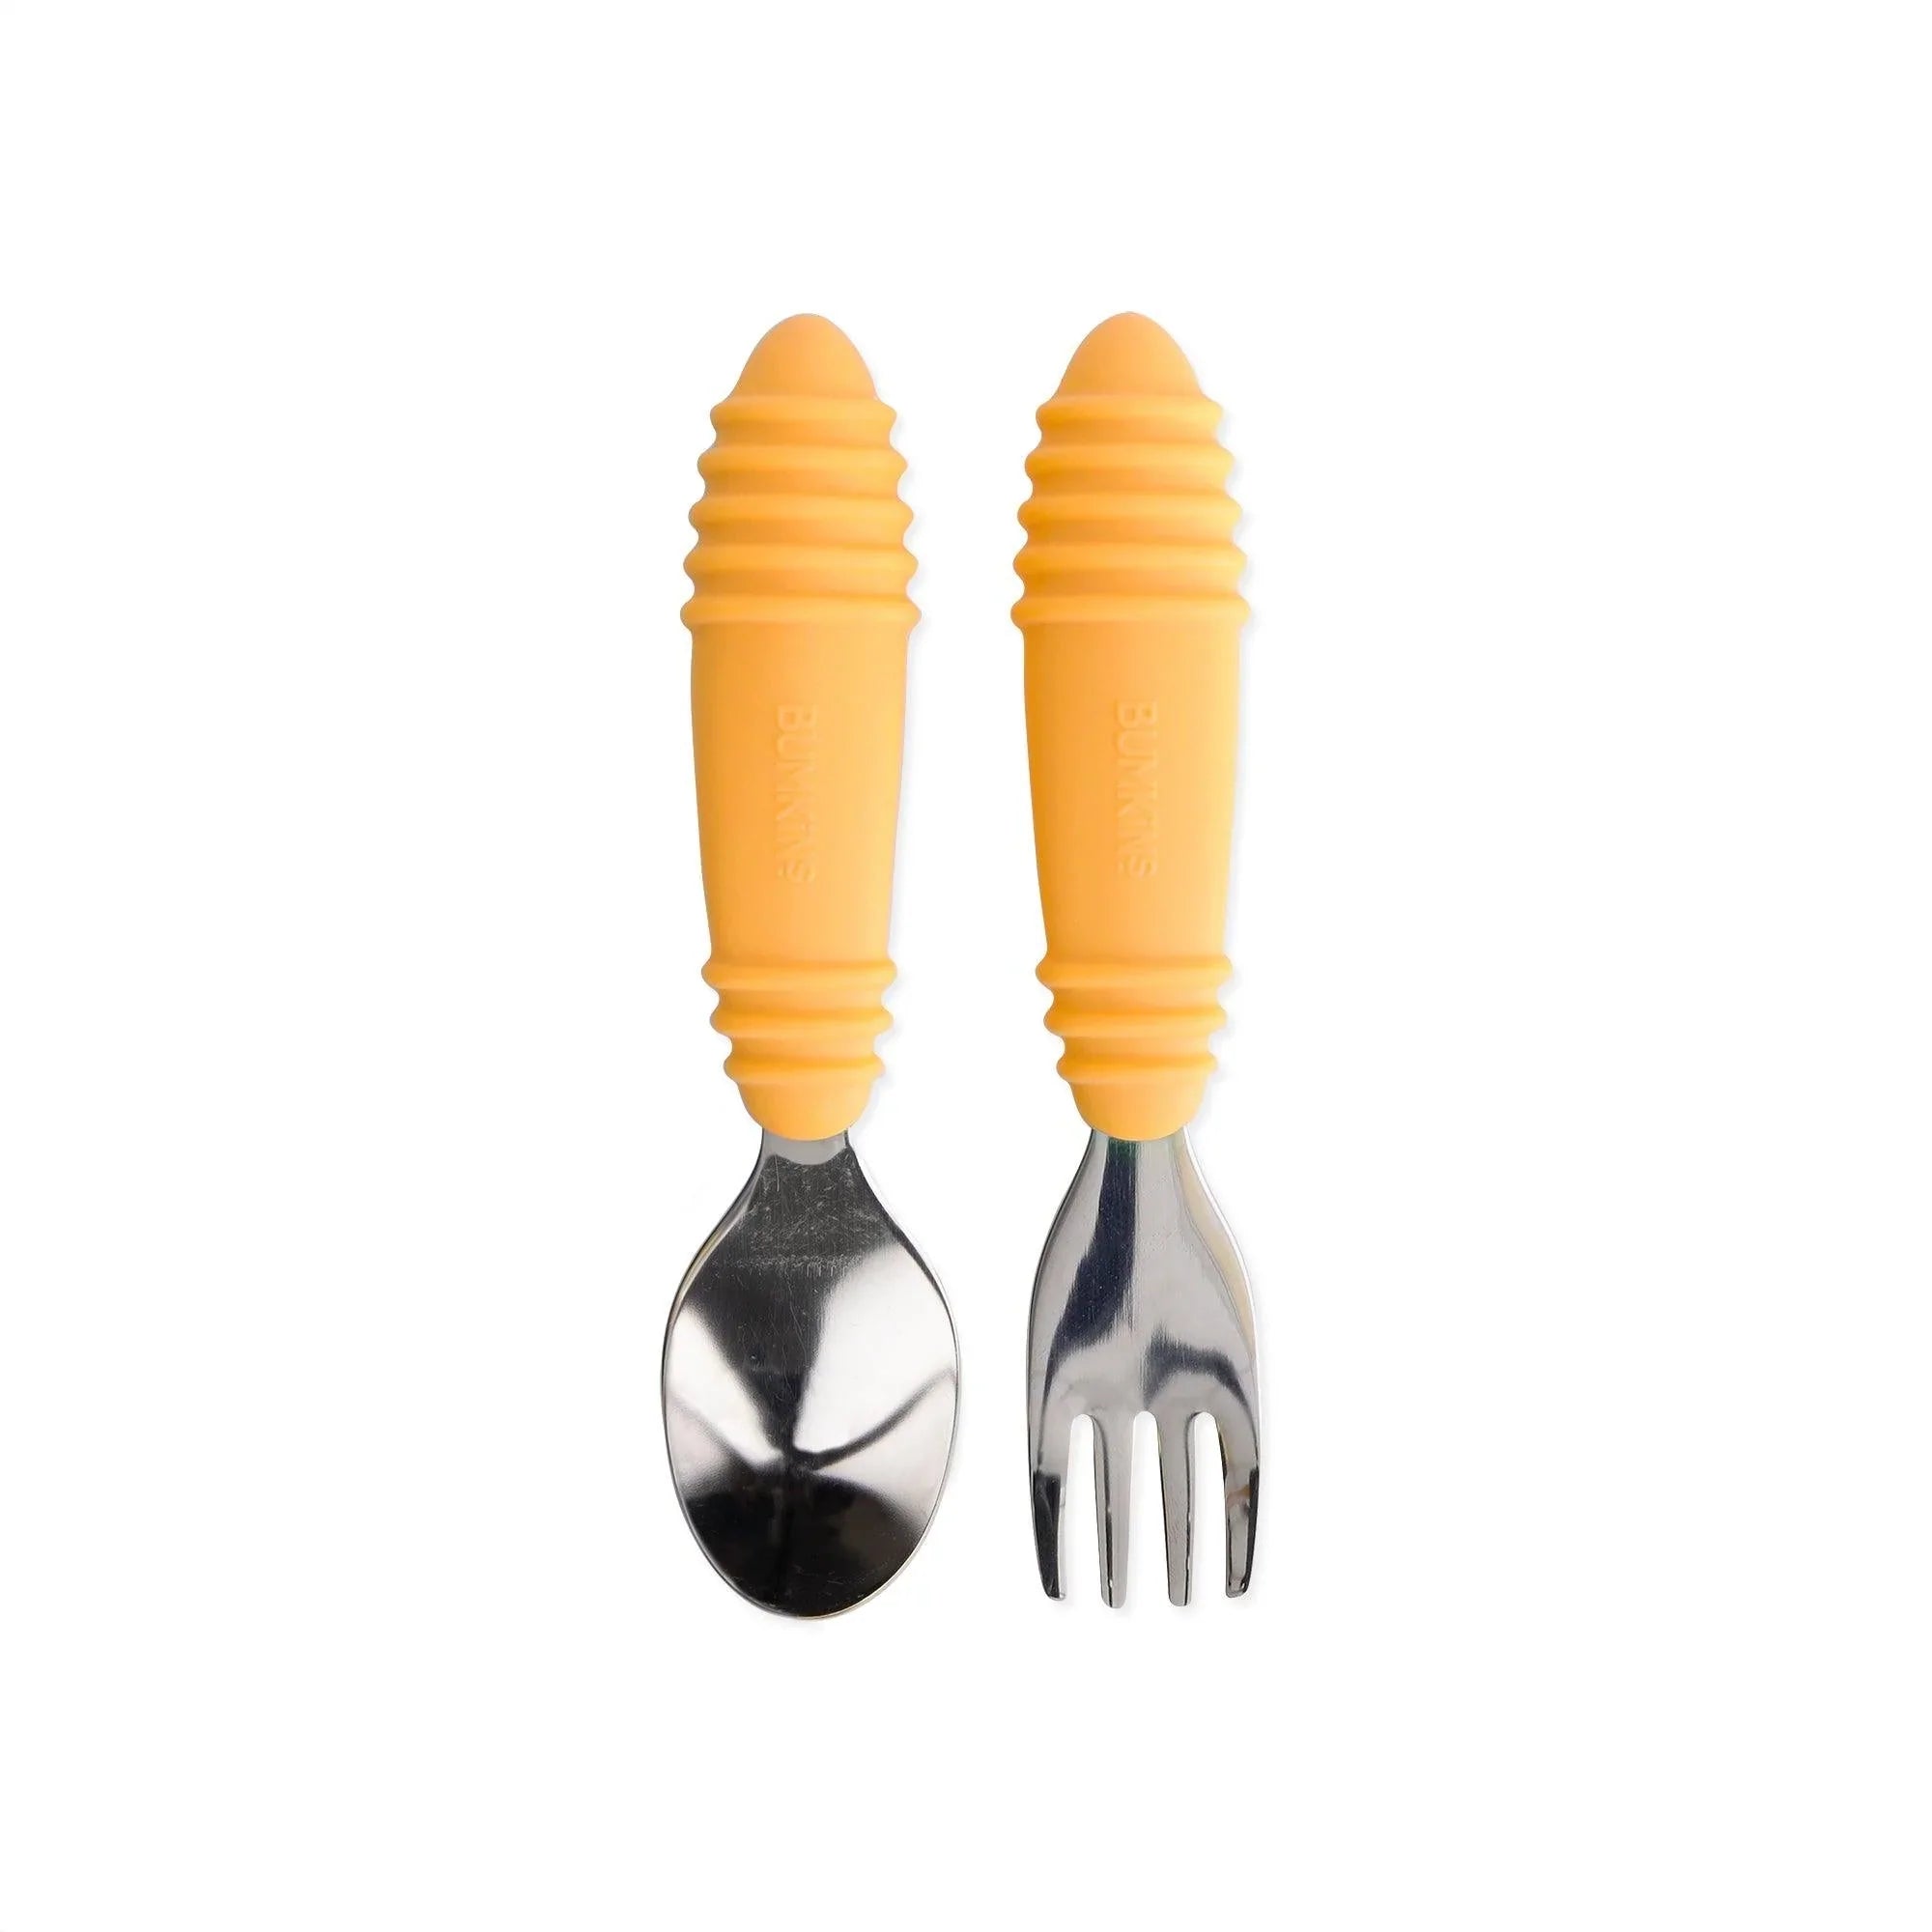 Marcus & Marcus - Easy Grip Cutlery Set, Lola